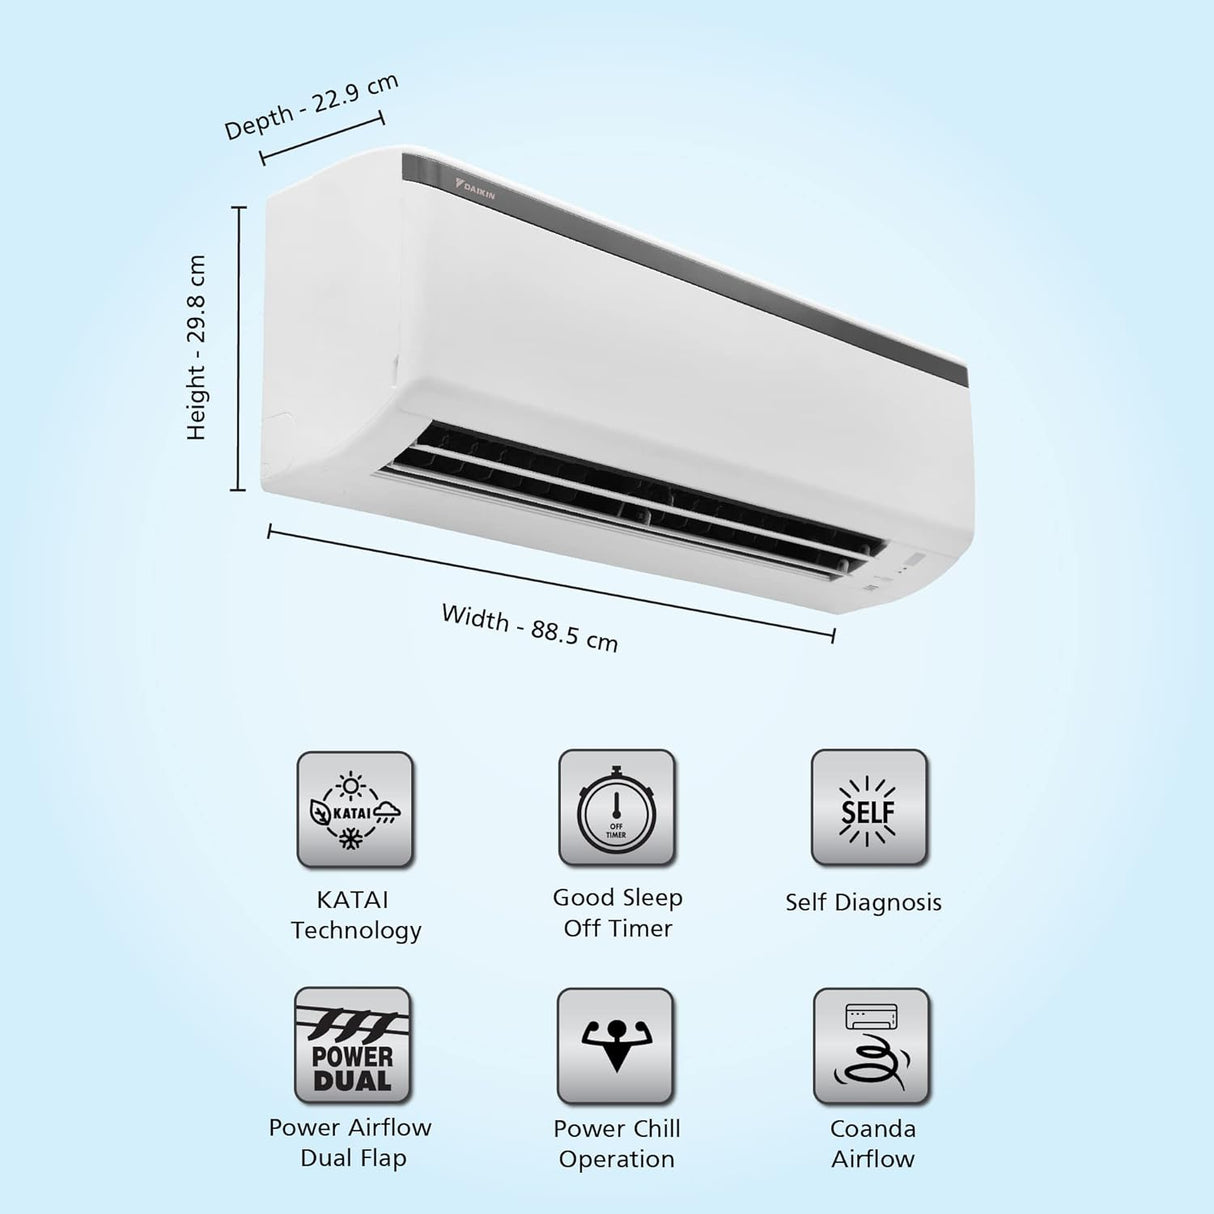 Top Air Conditioner: Daikin FTKL50UV16V 1.5 Ton 3 Star Inverter Split AC - White.